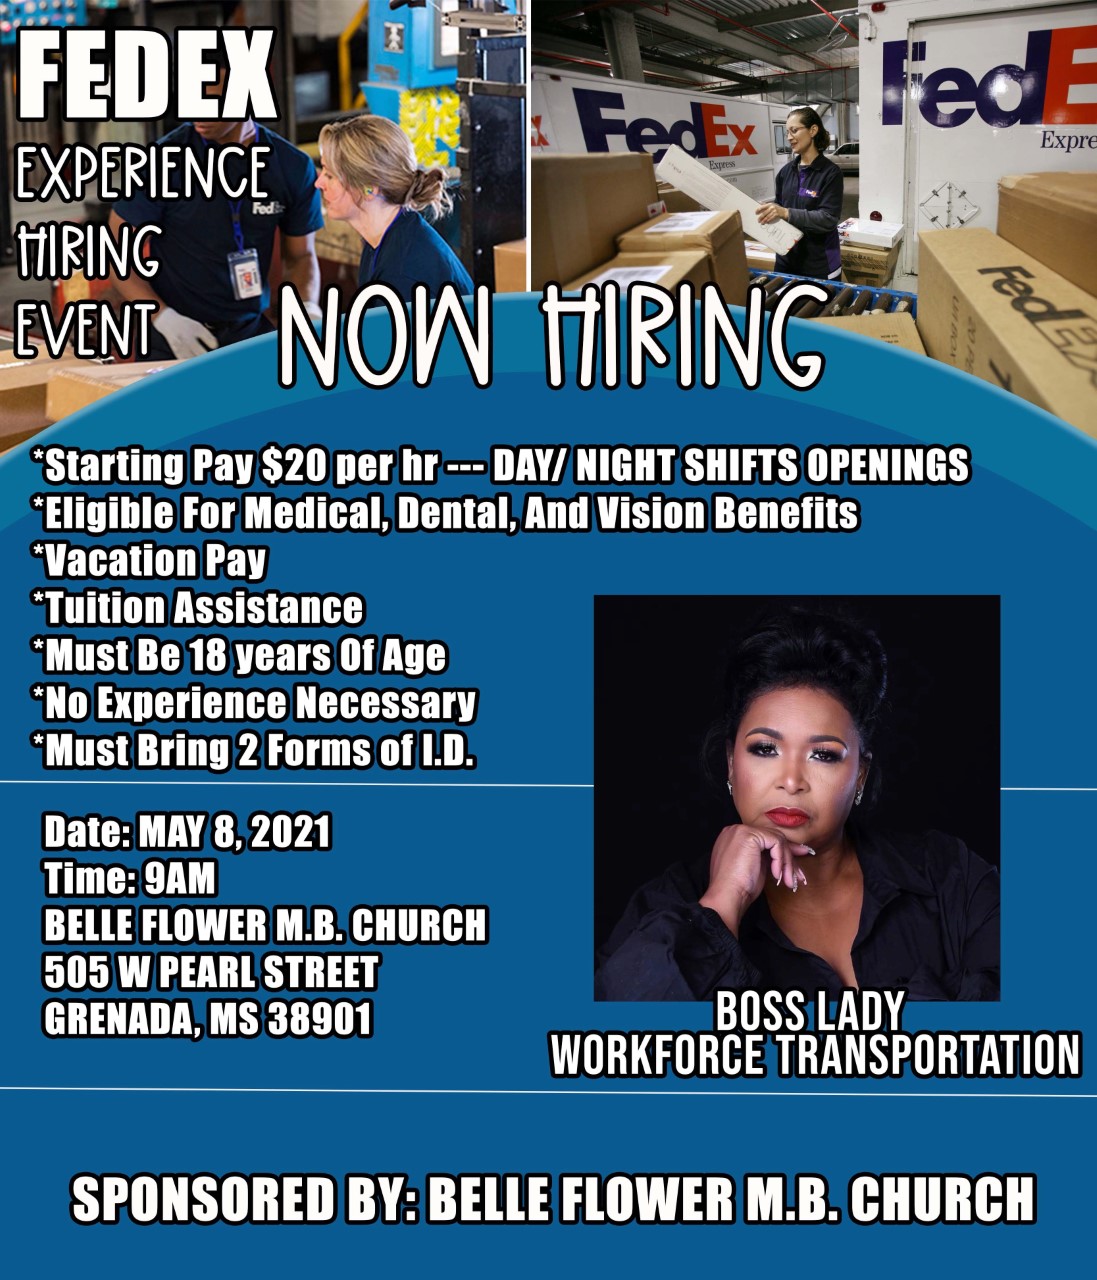 jobs hiring immediately near me full time no experience